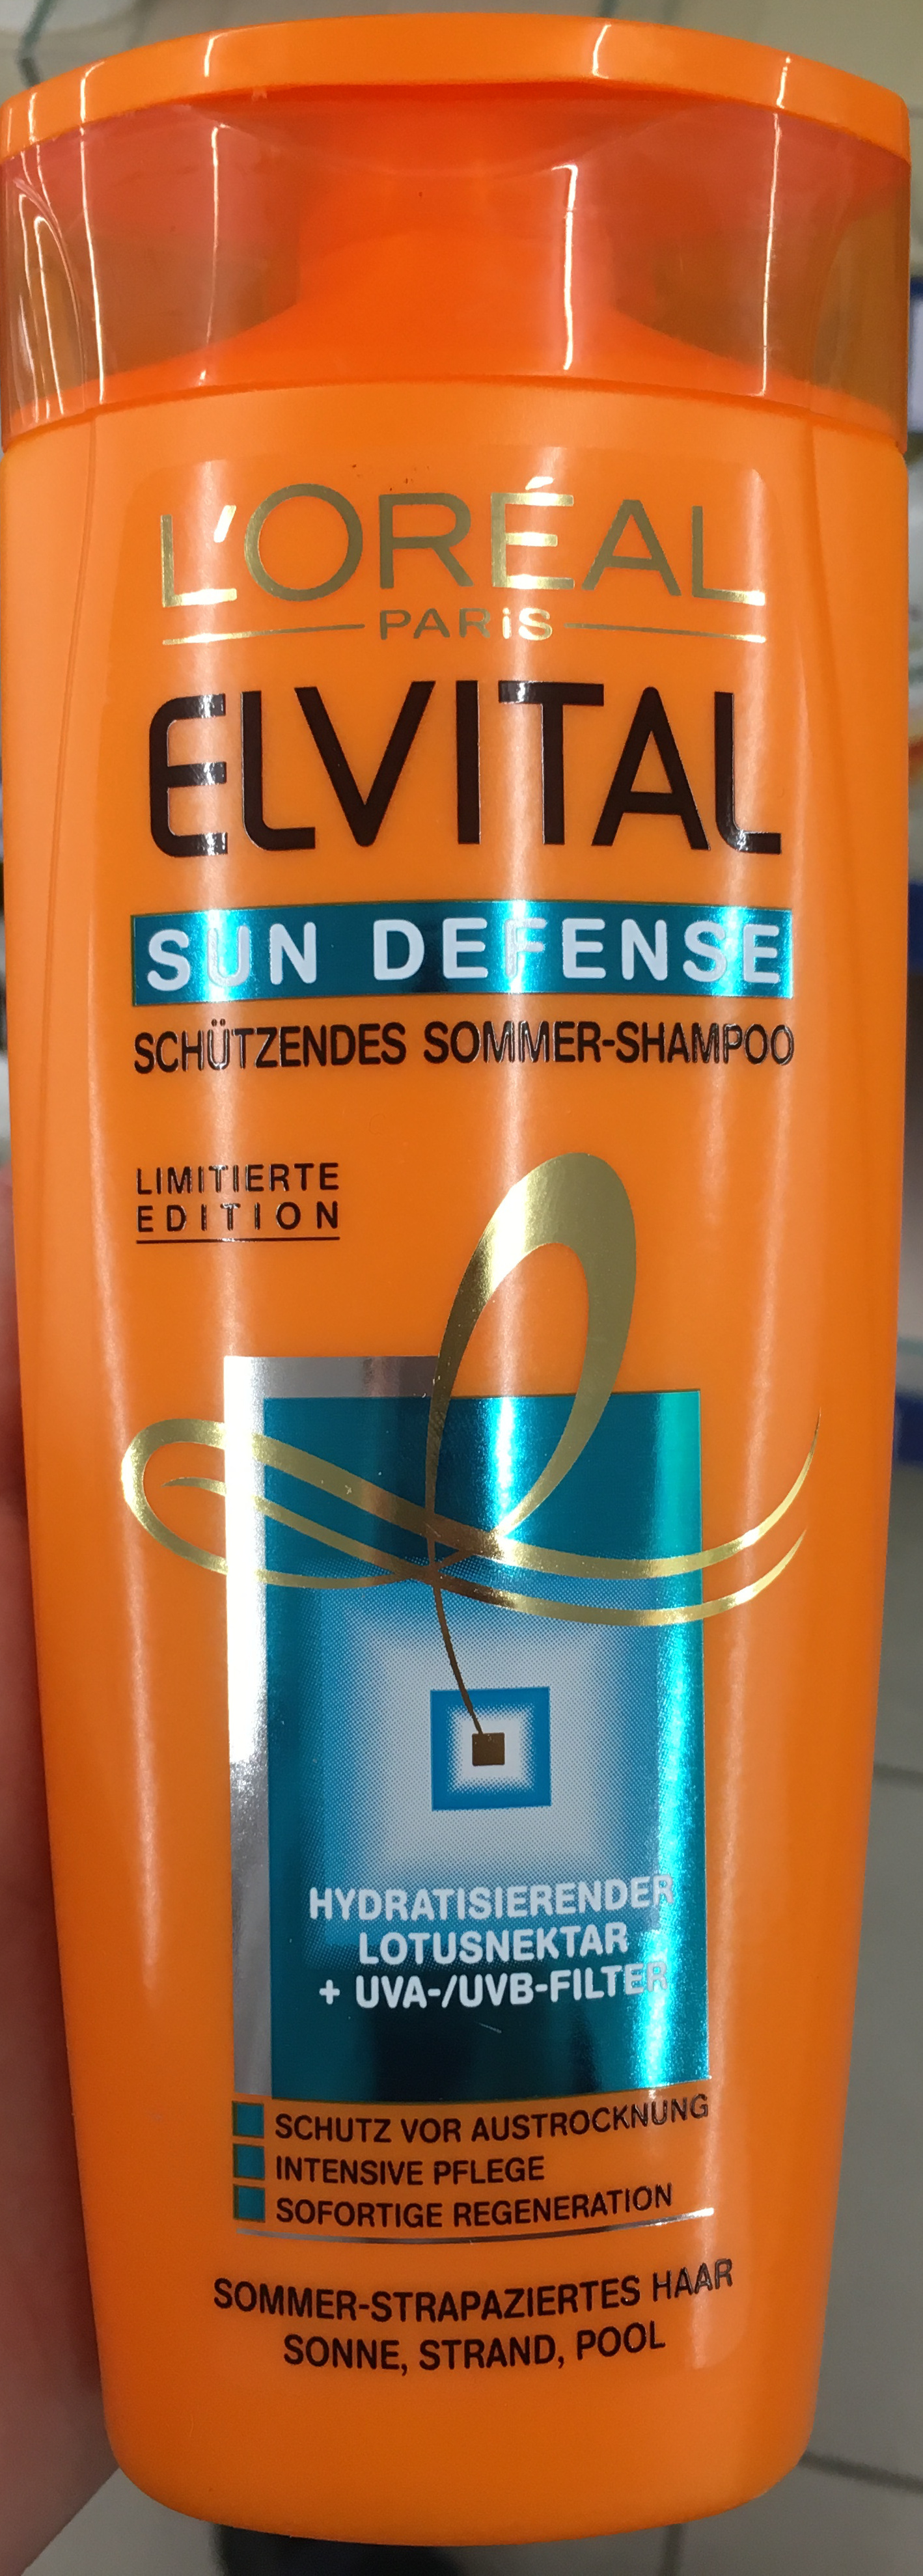 Elvital Soin Defense Schützendes Sommer-Shampoo - Produit - fr